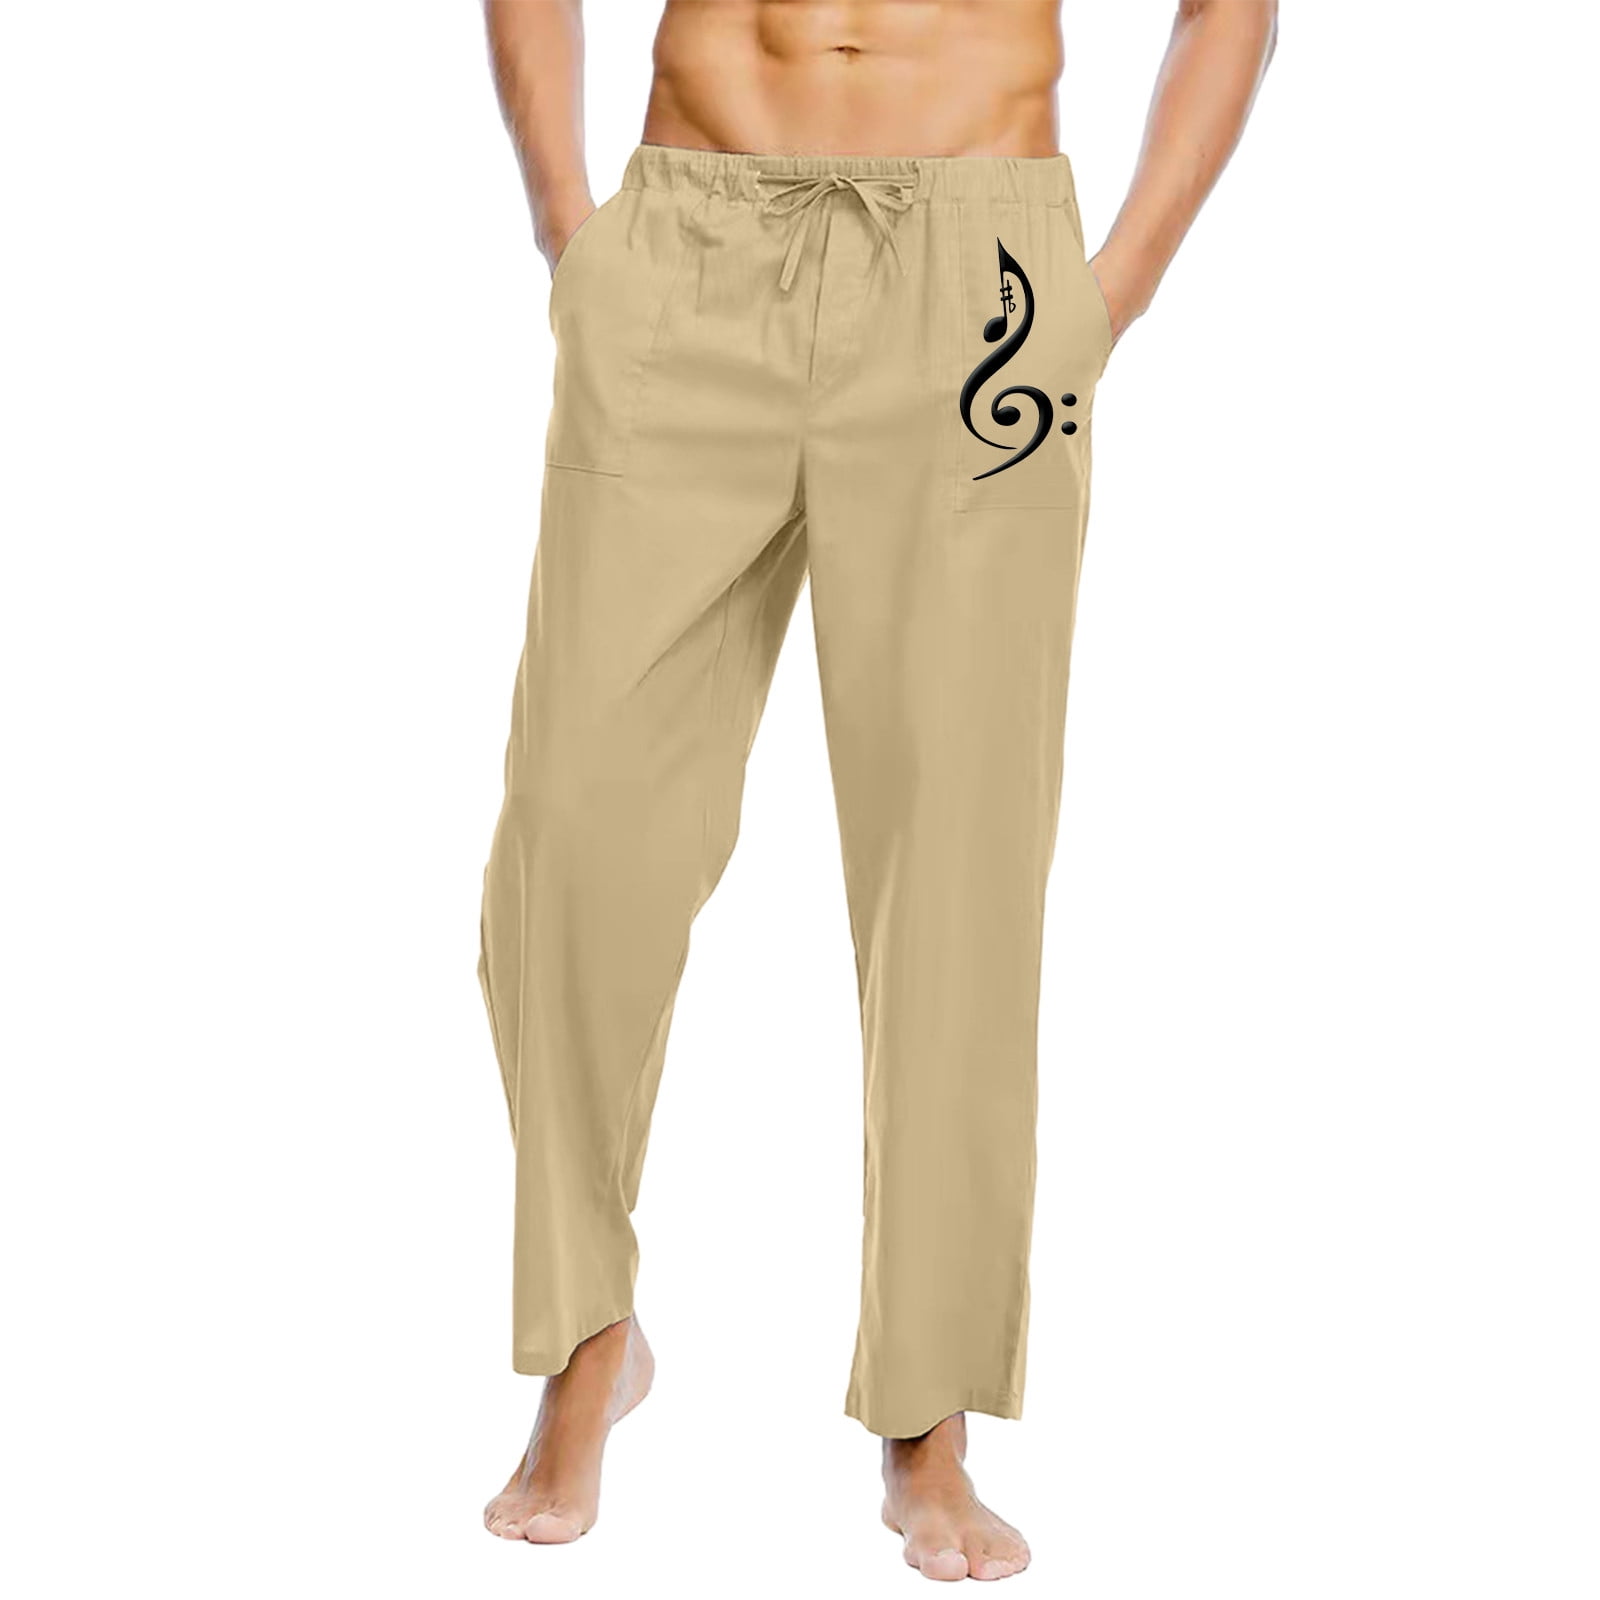 ✓ Boho Style High Waist Orange Cotton Pants for Men